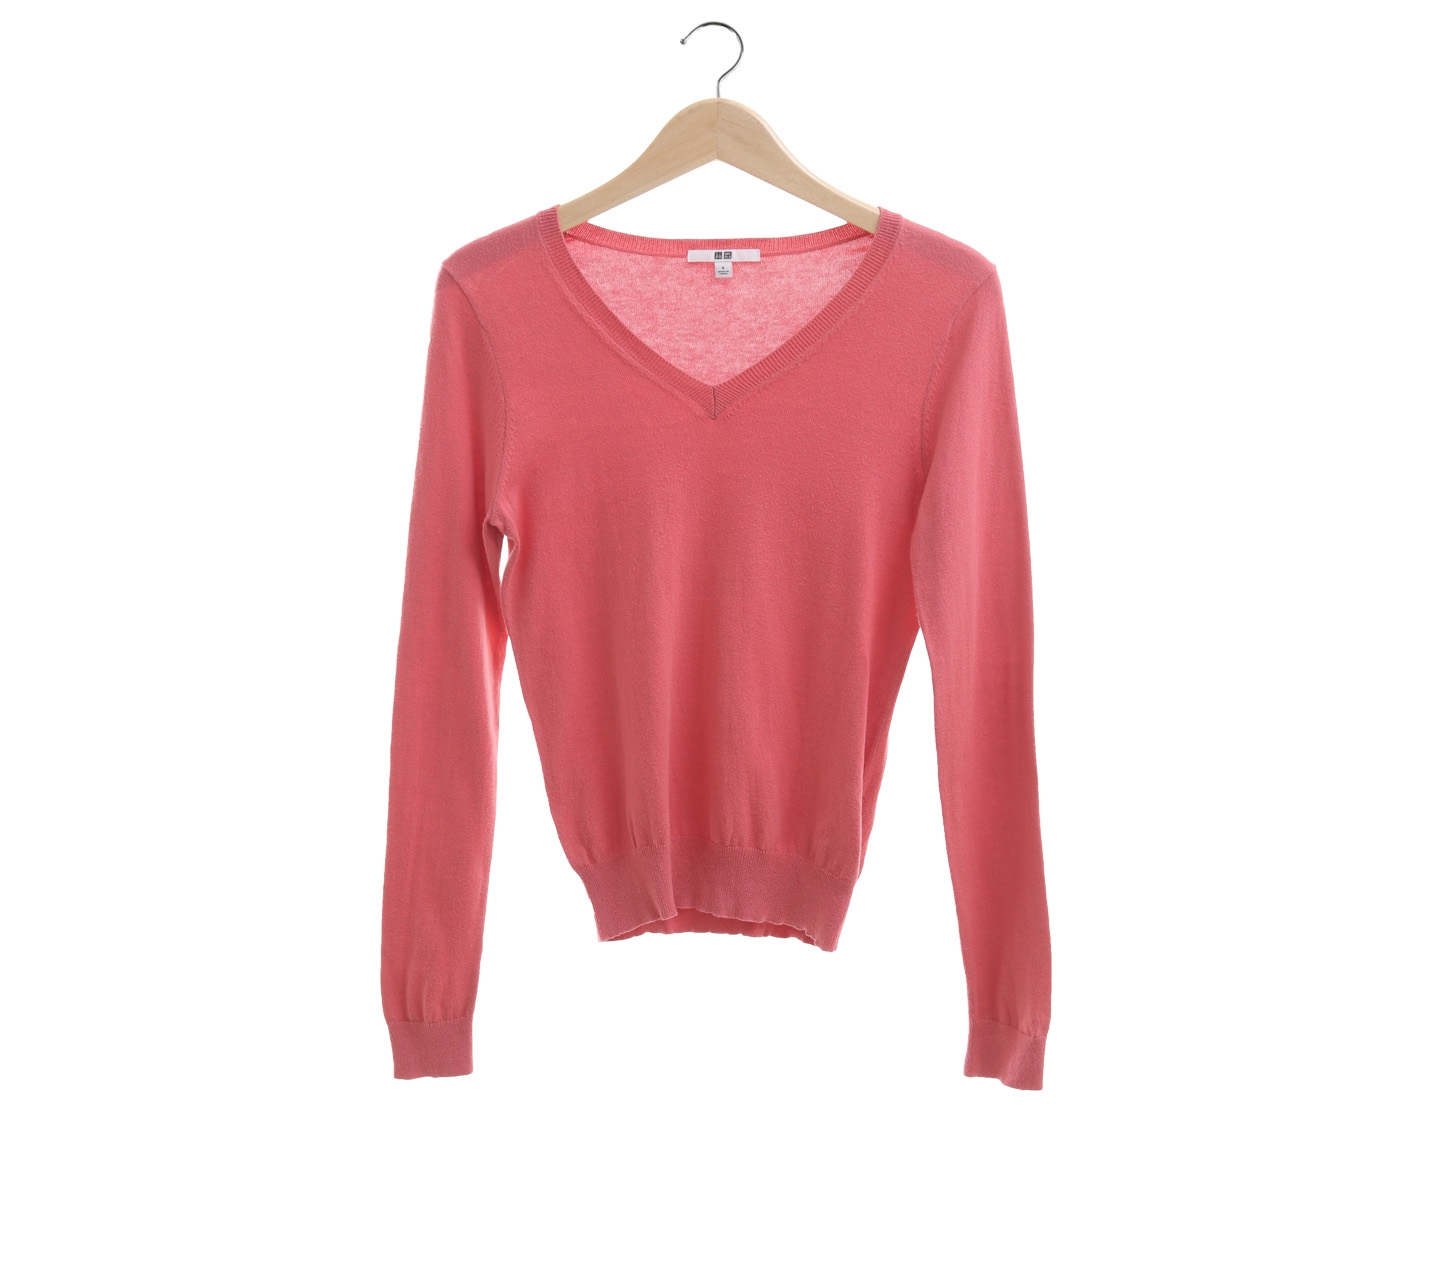 Uniqlo Pink Coral Sweater